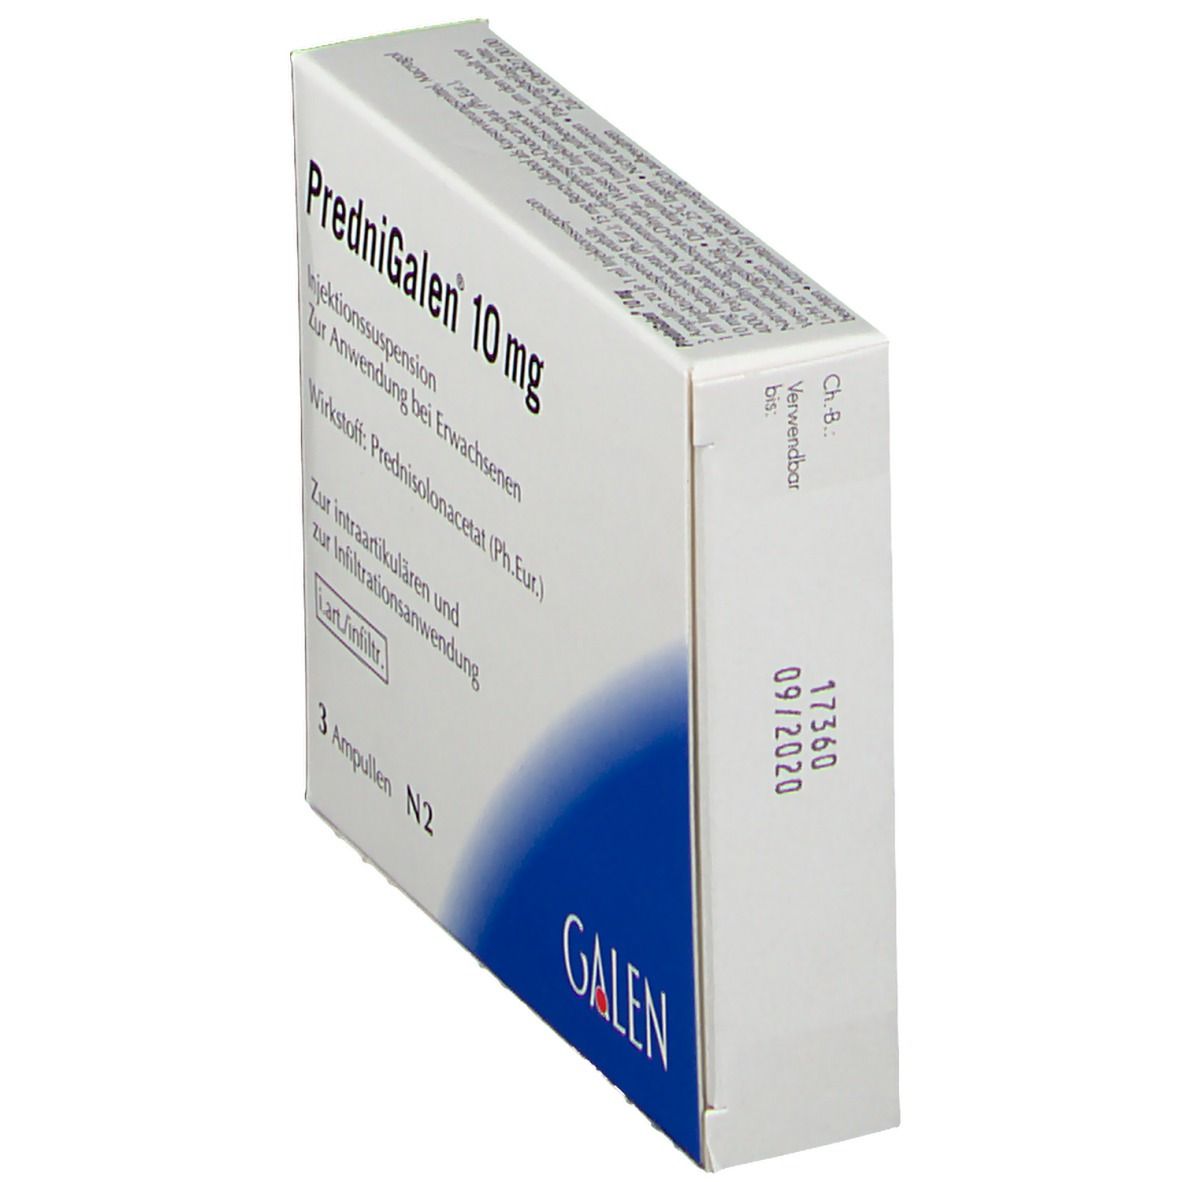 PredniGalen® 10 mg